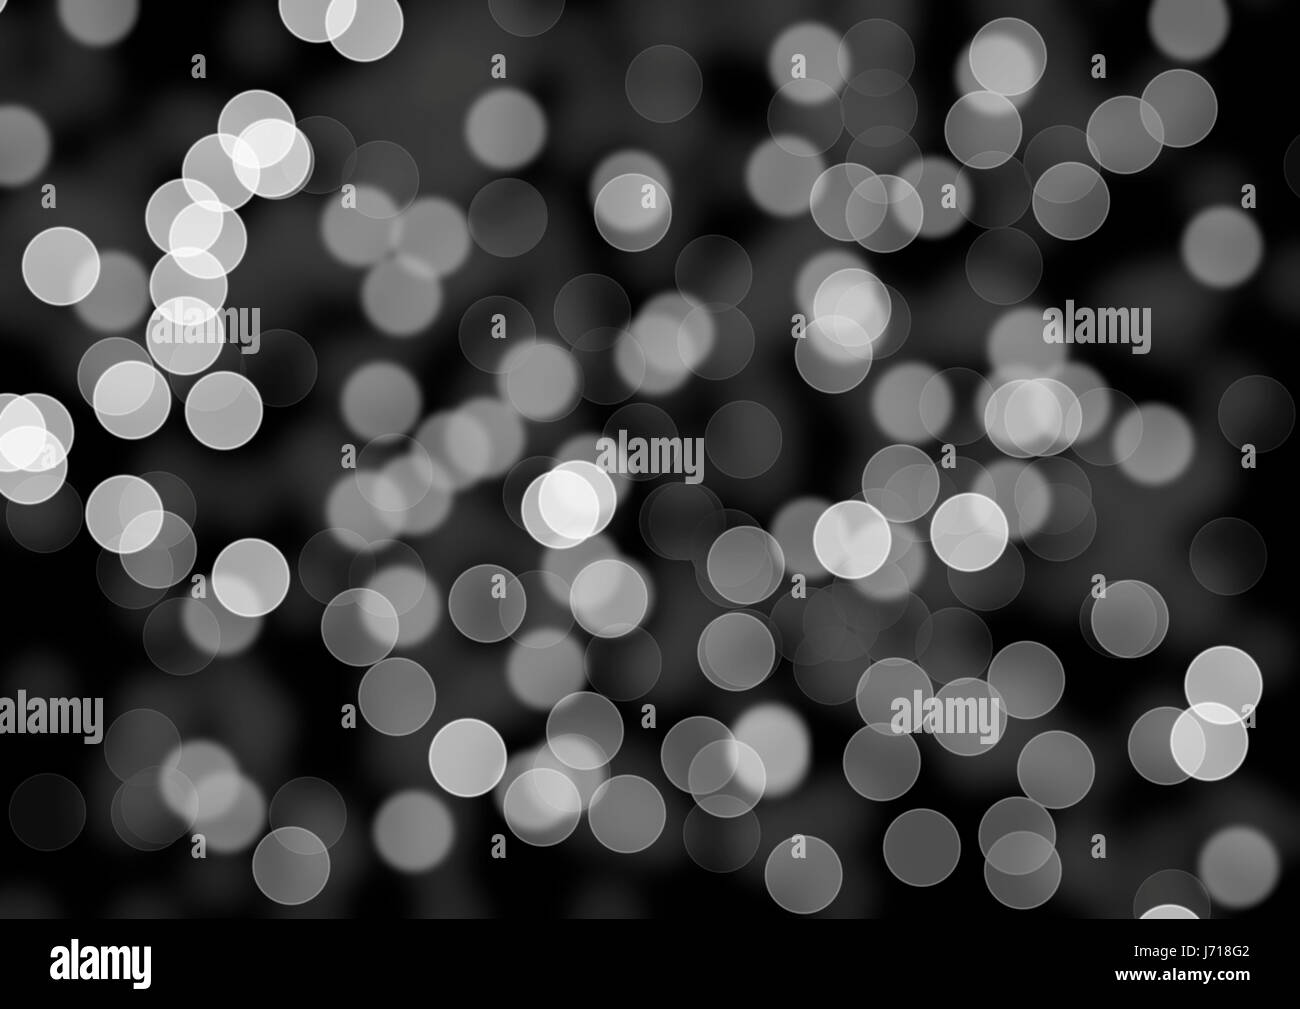 illustration bubble soap bubble focus abstract blur backdrop background  blue Stock Photo - Alamy